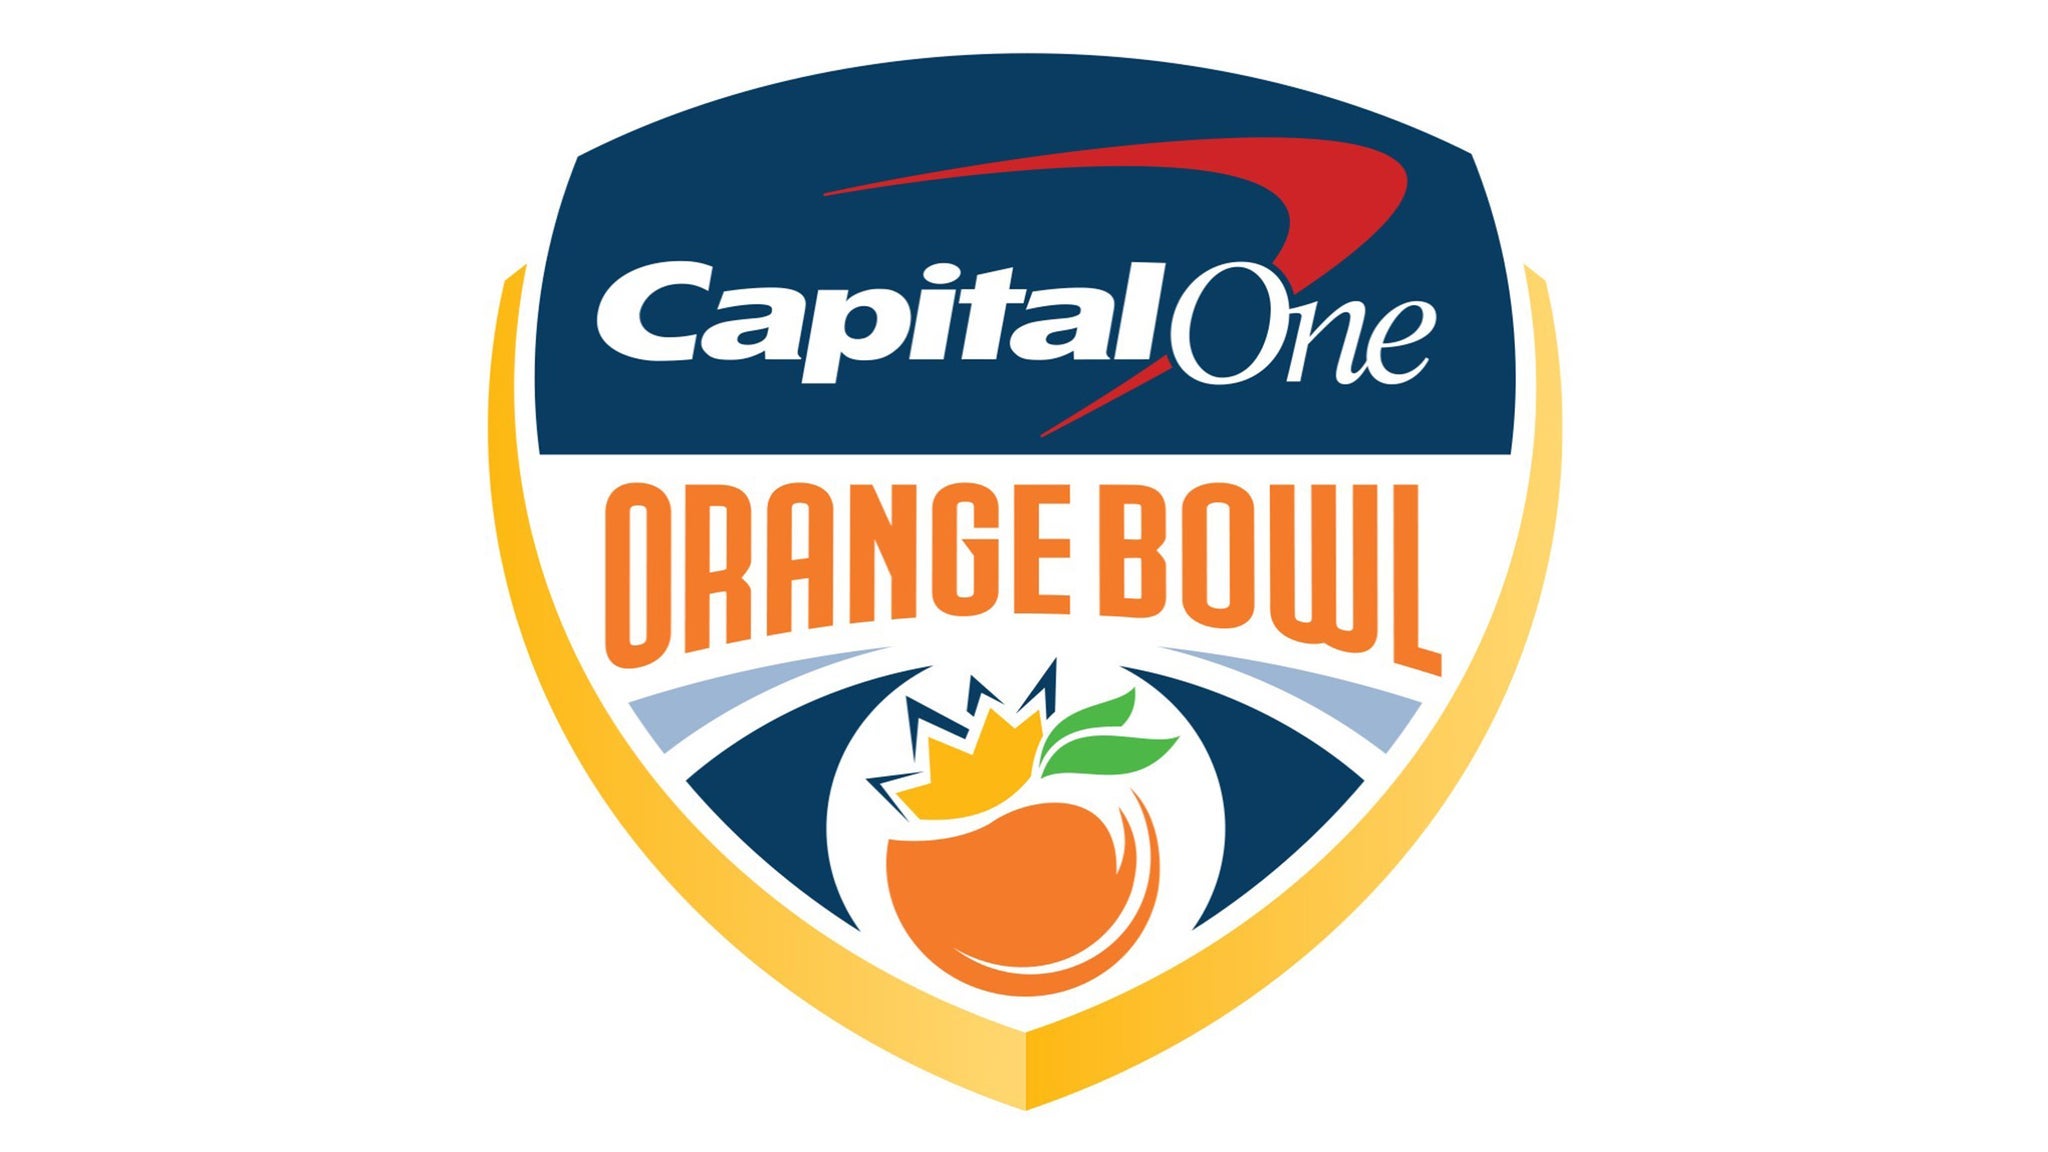 presale code to Capital One Orange Bowl advanced tickets in Miami